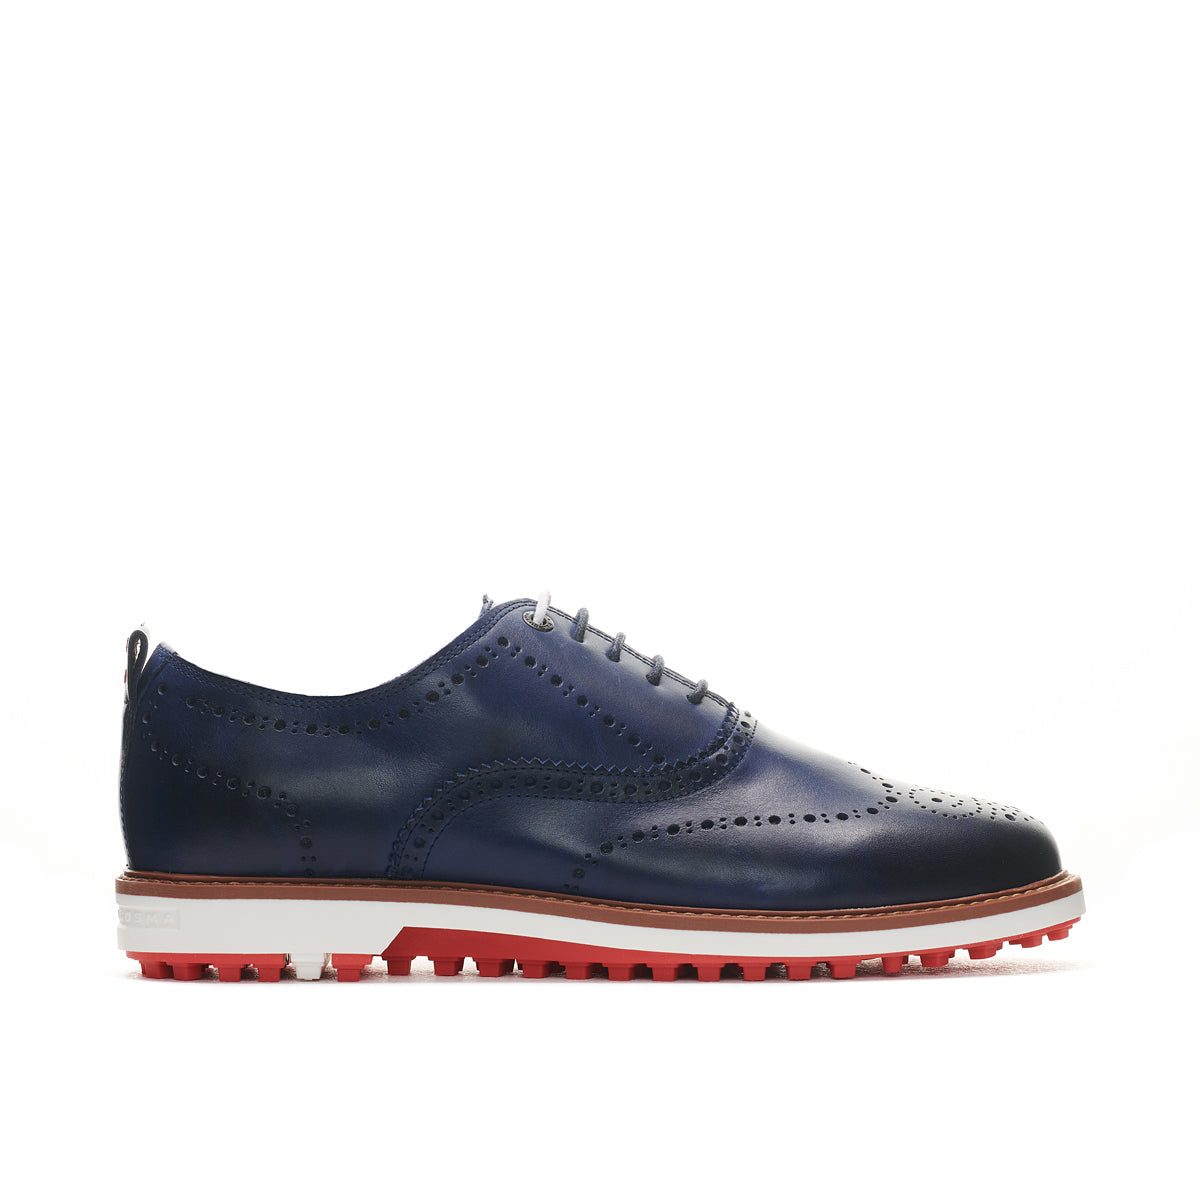 Men's Churchill Royal Blue Golf Shoe